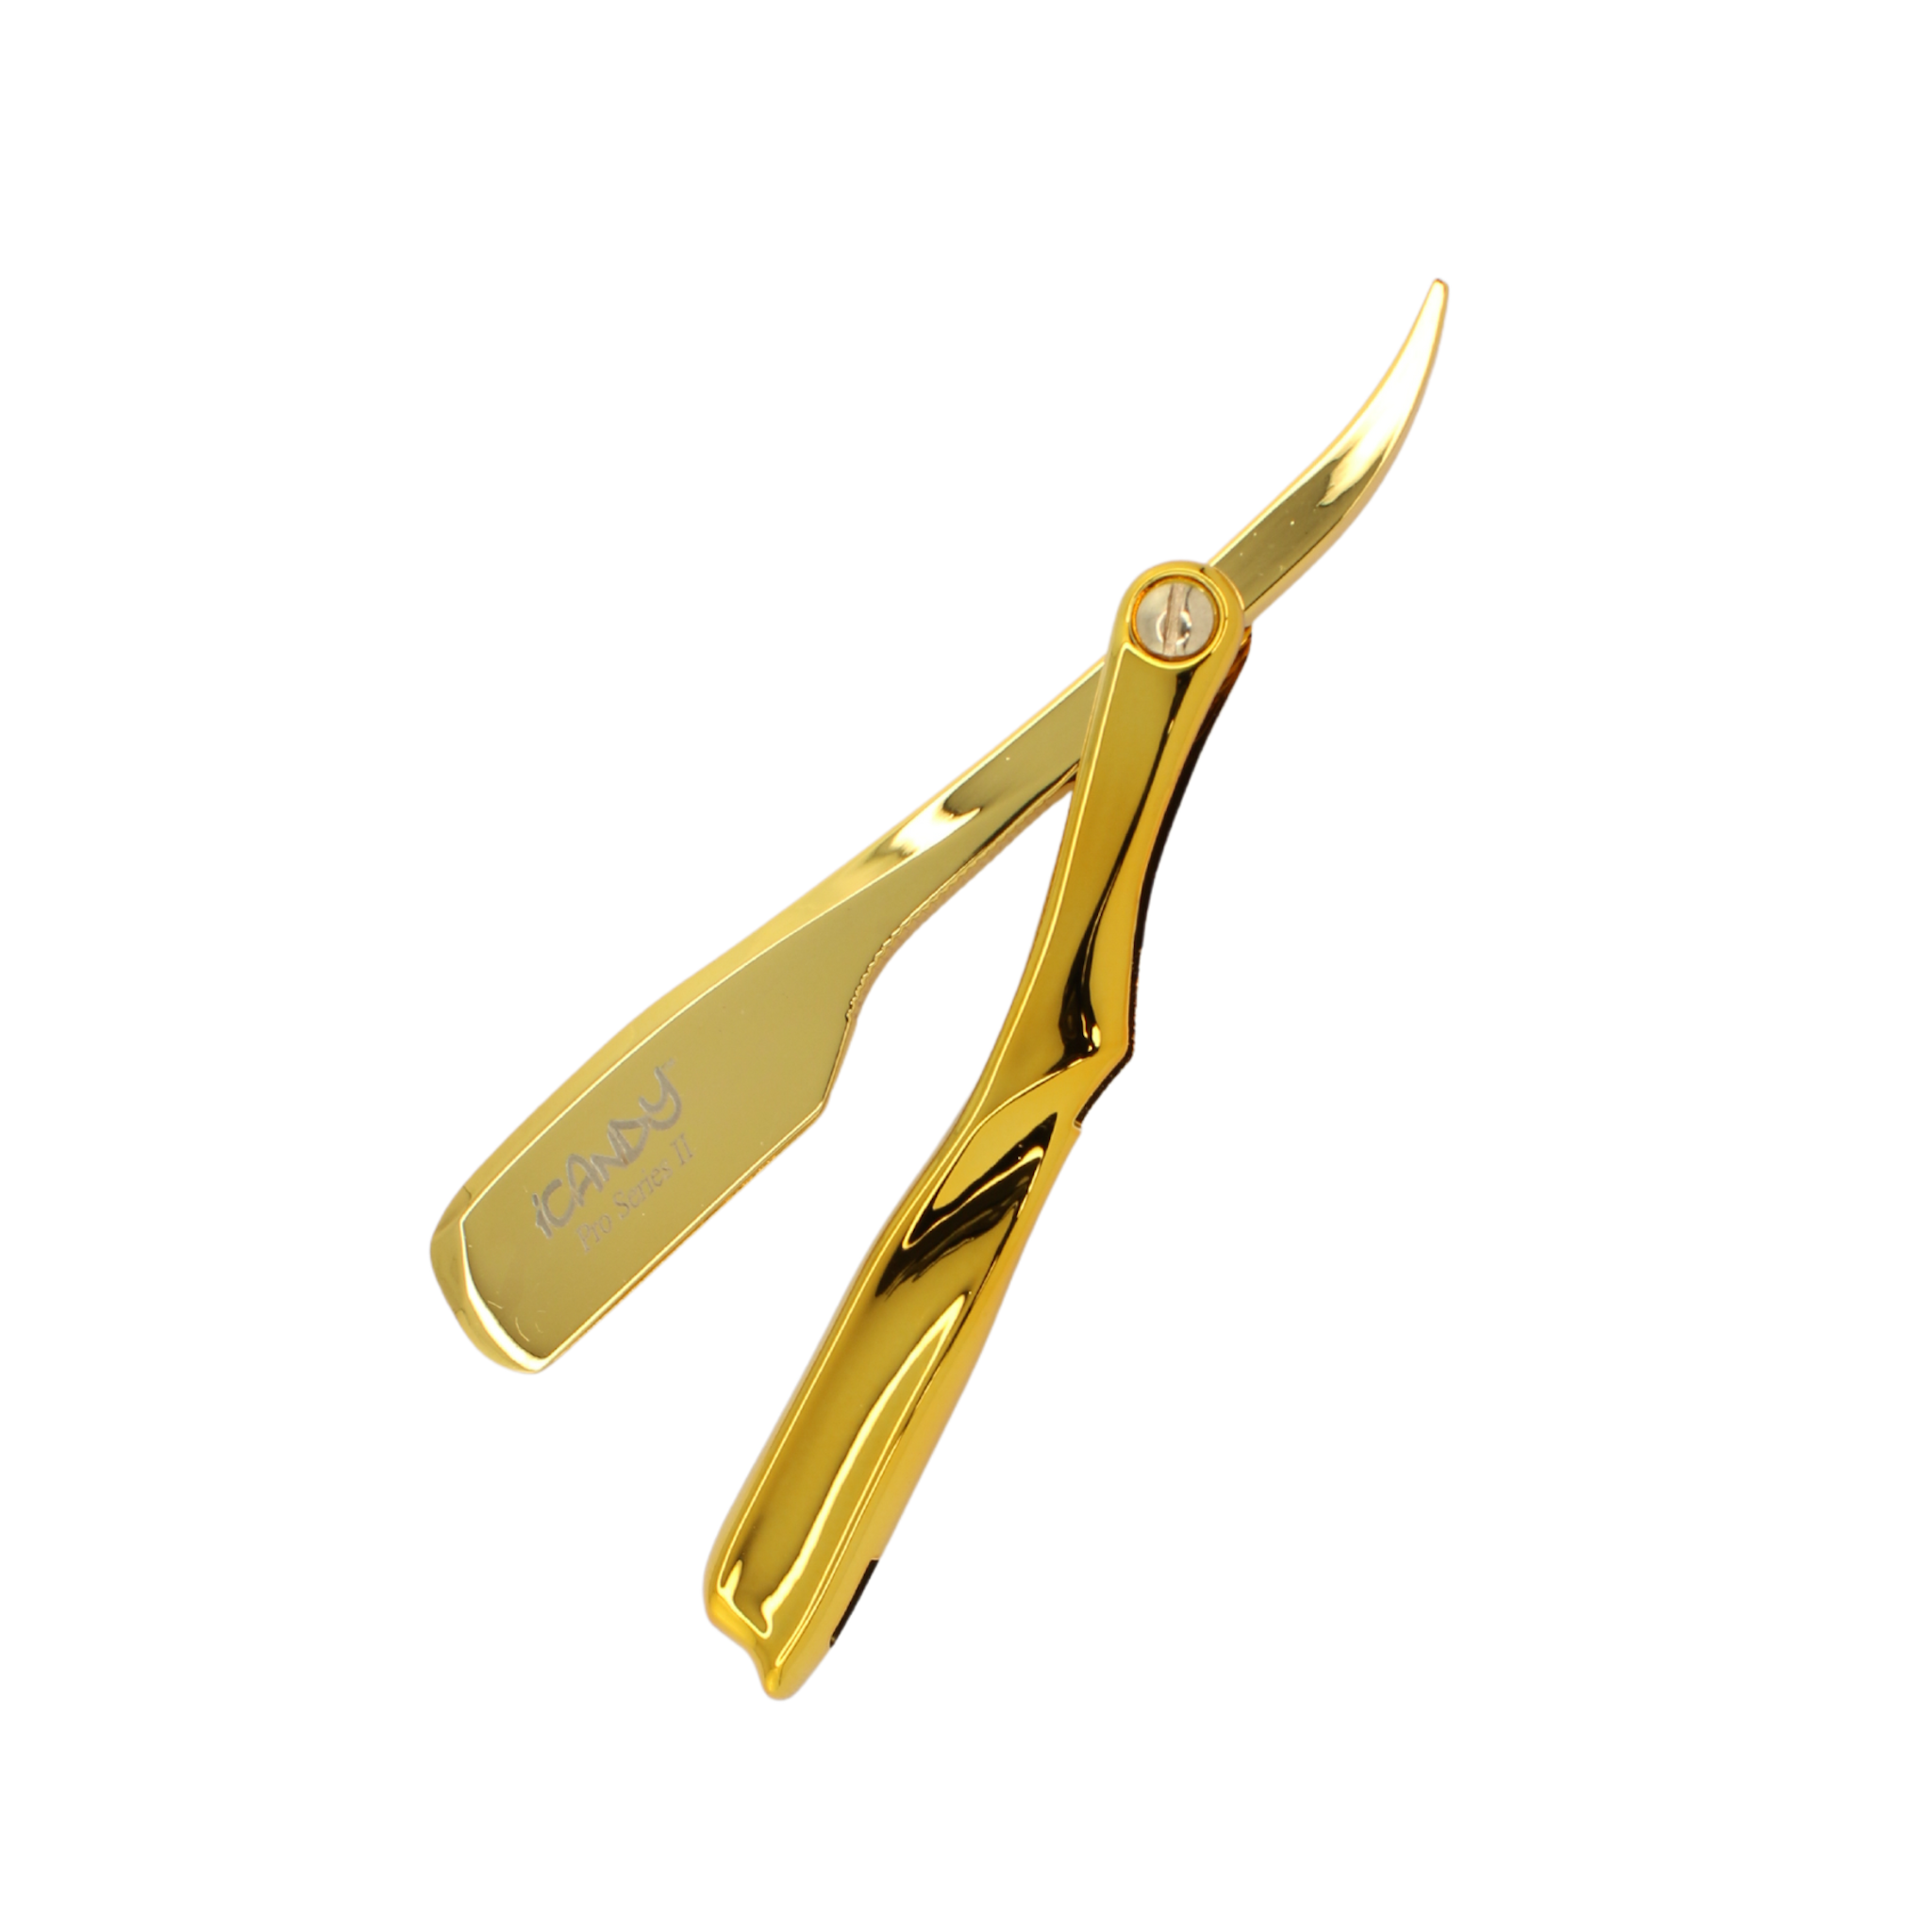 iCandy Pro Series Barber Razor - Full Yellow Gold